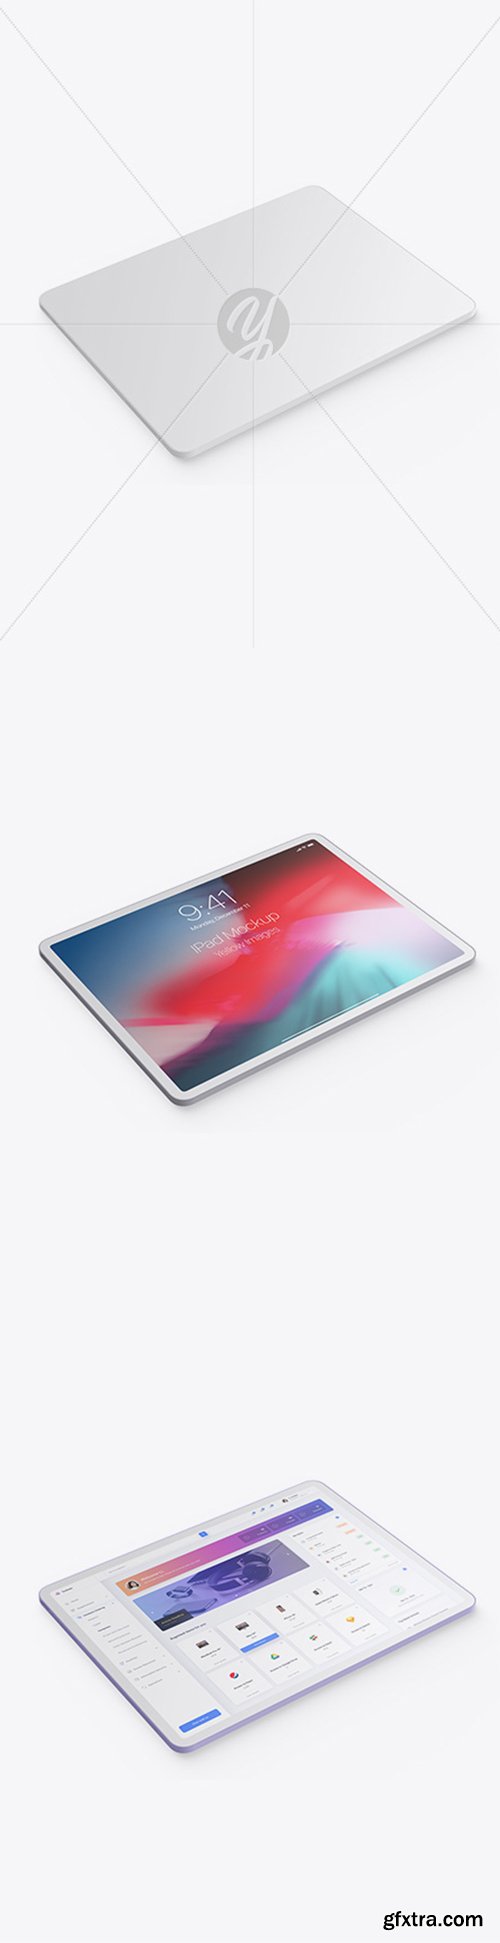 Clay Apple iPad Pro 2018 12.9 Mockup 44126